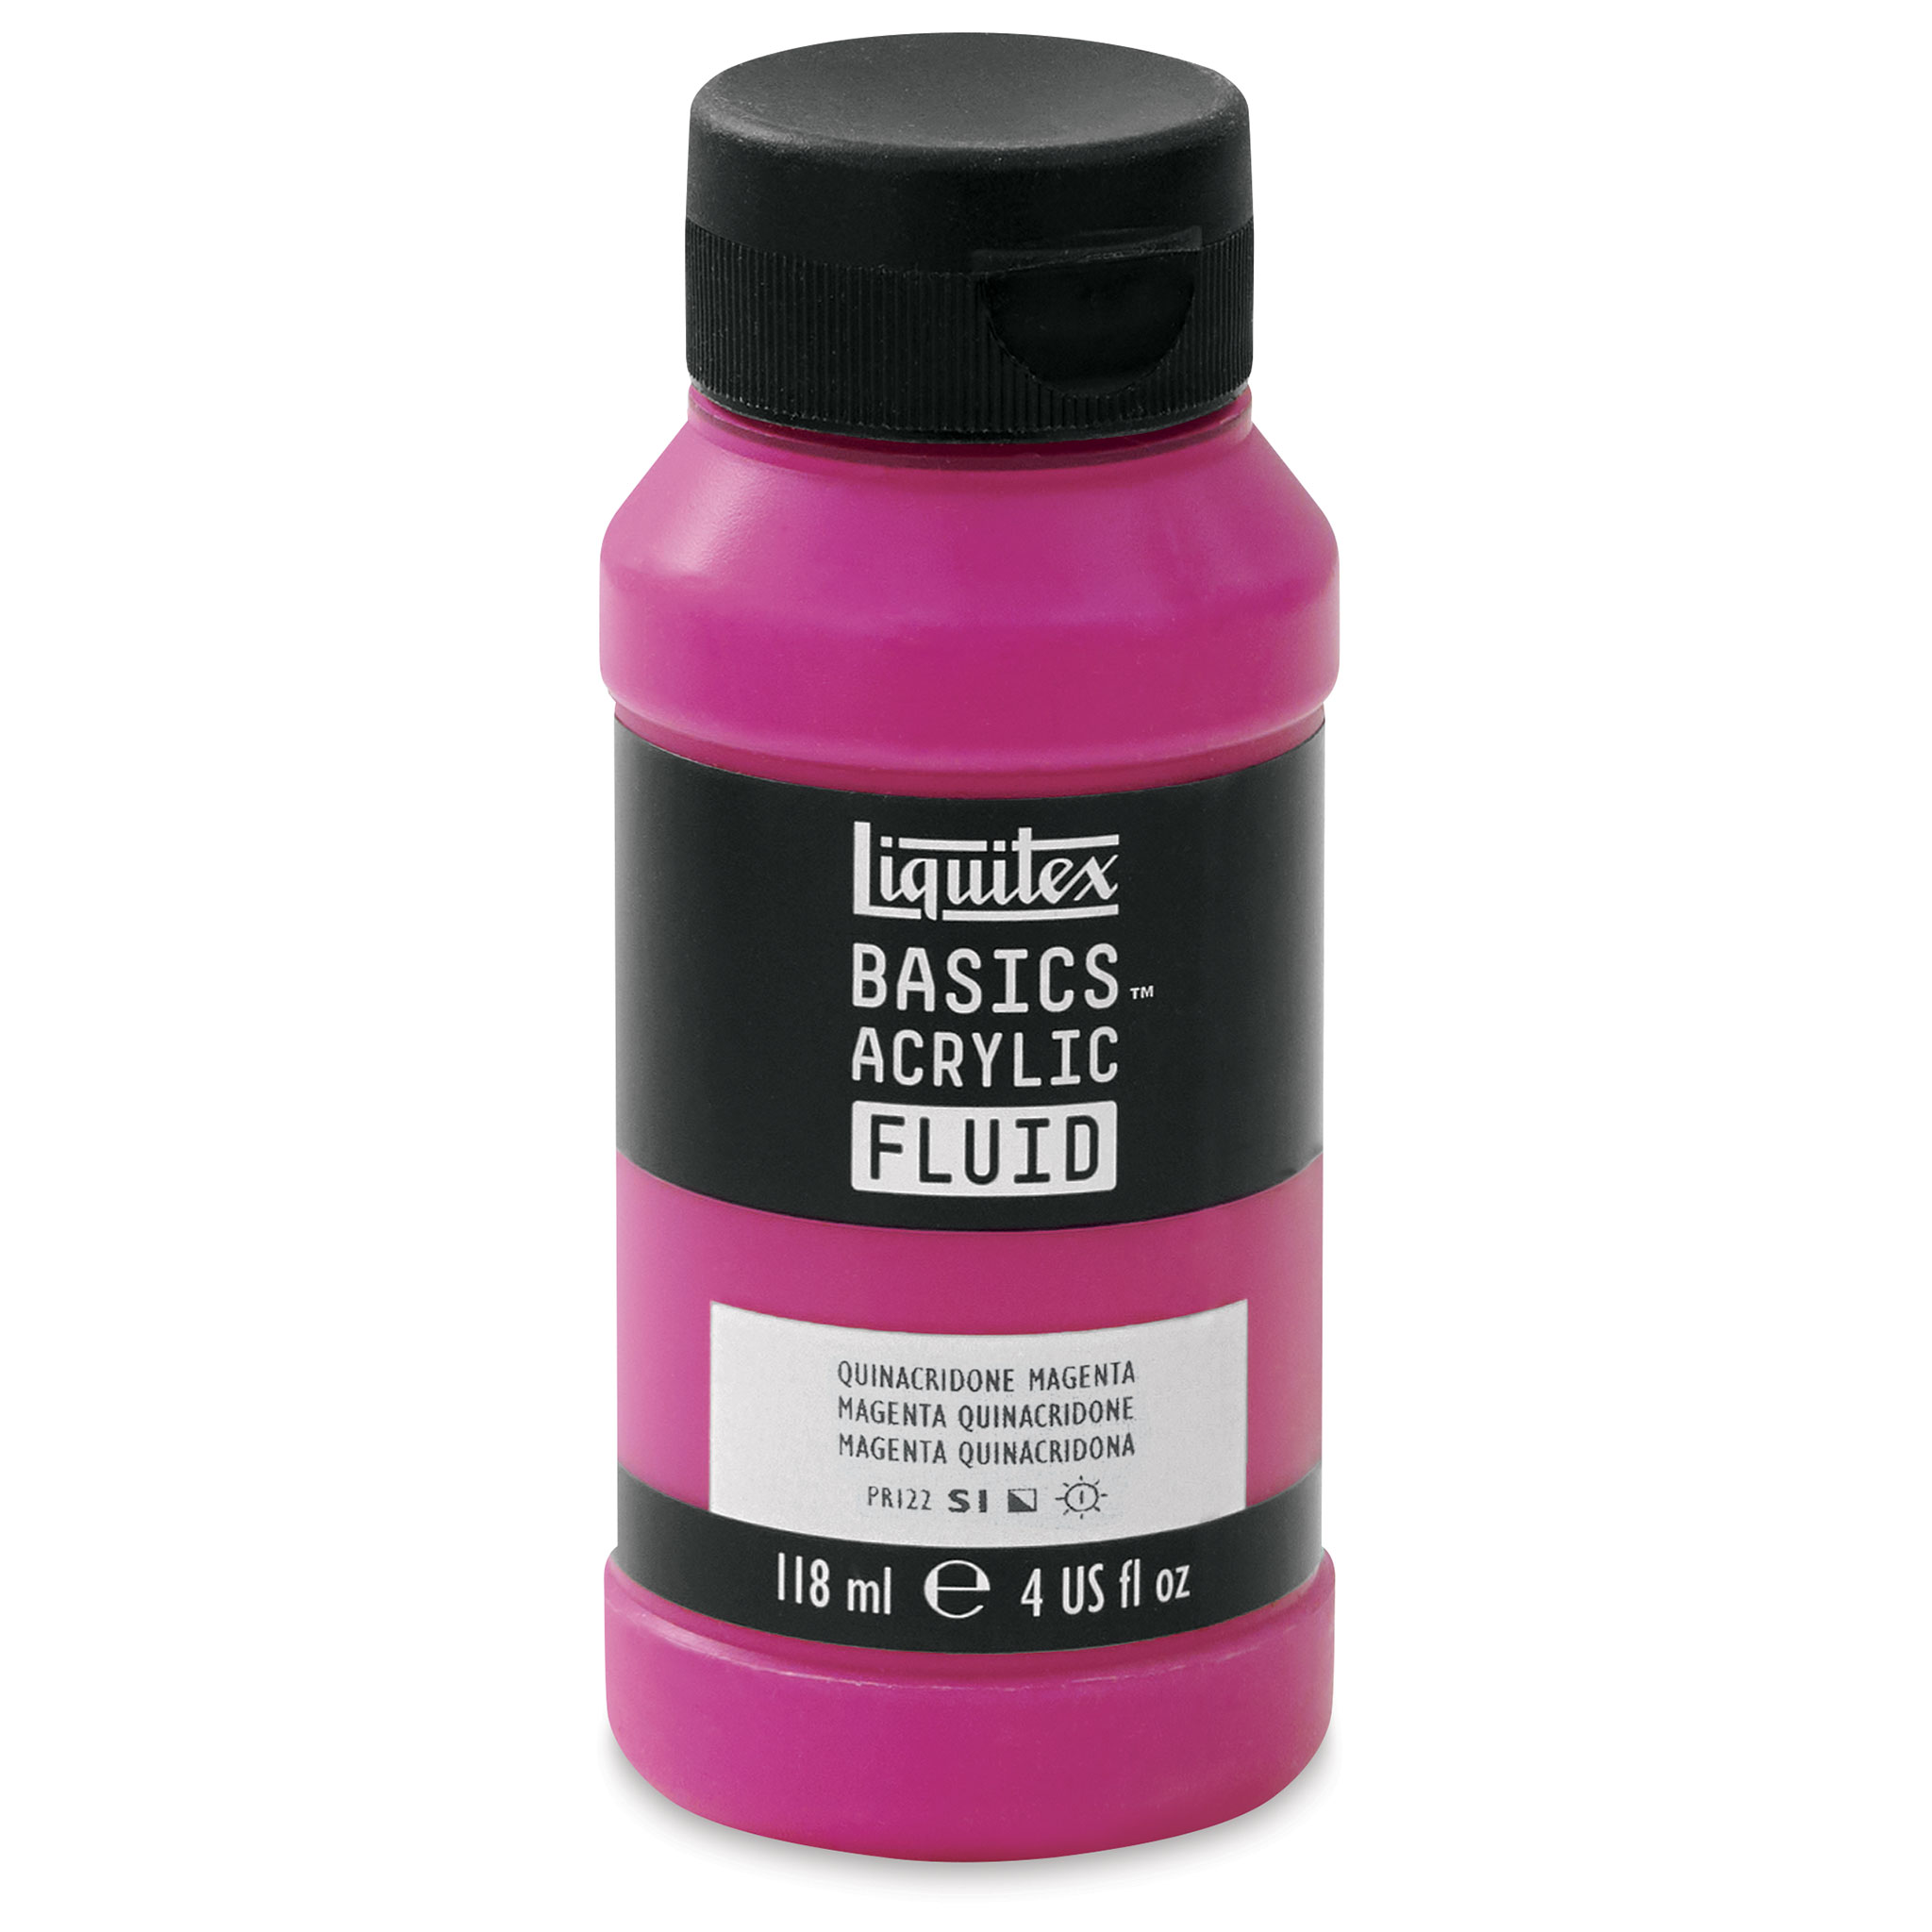 Liquitex Basics Acrylic Paint Quinacridone Magenta 4 oz